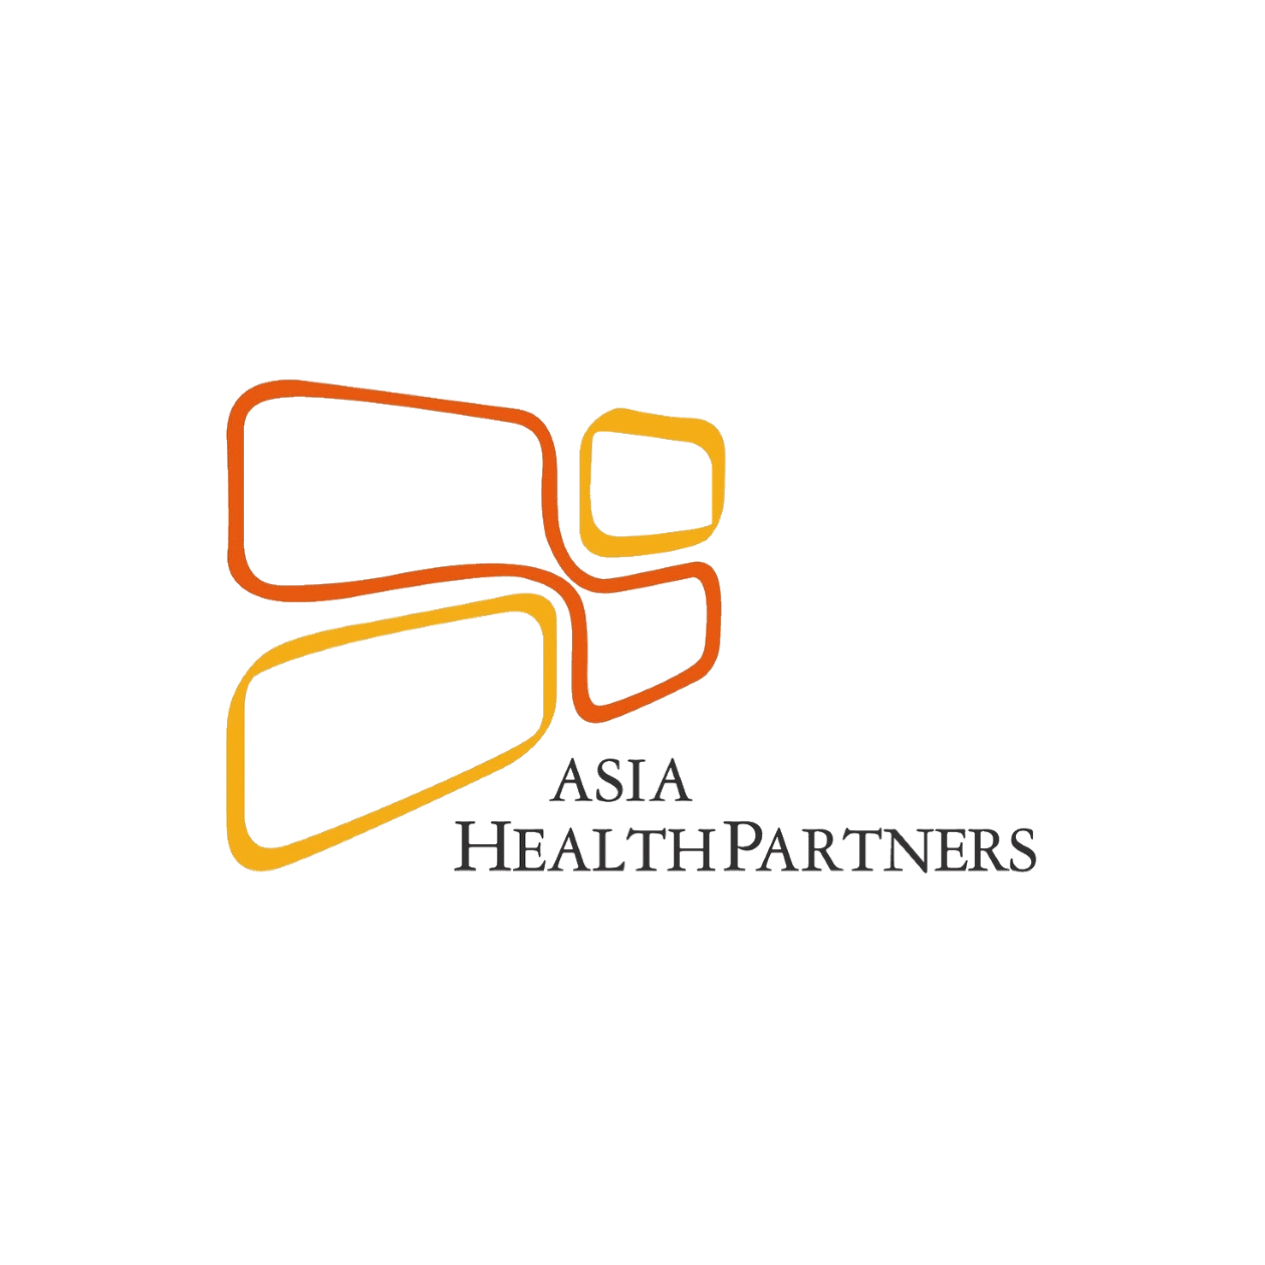 Asia HealthPartners